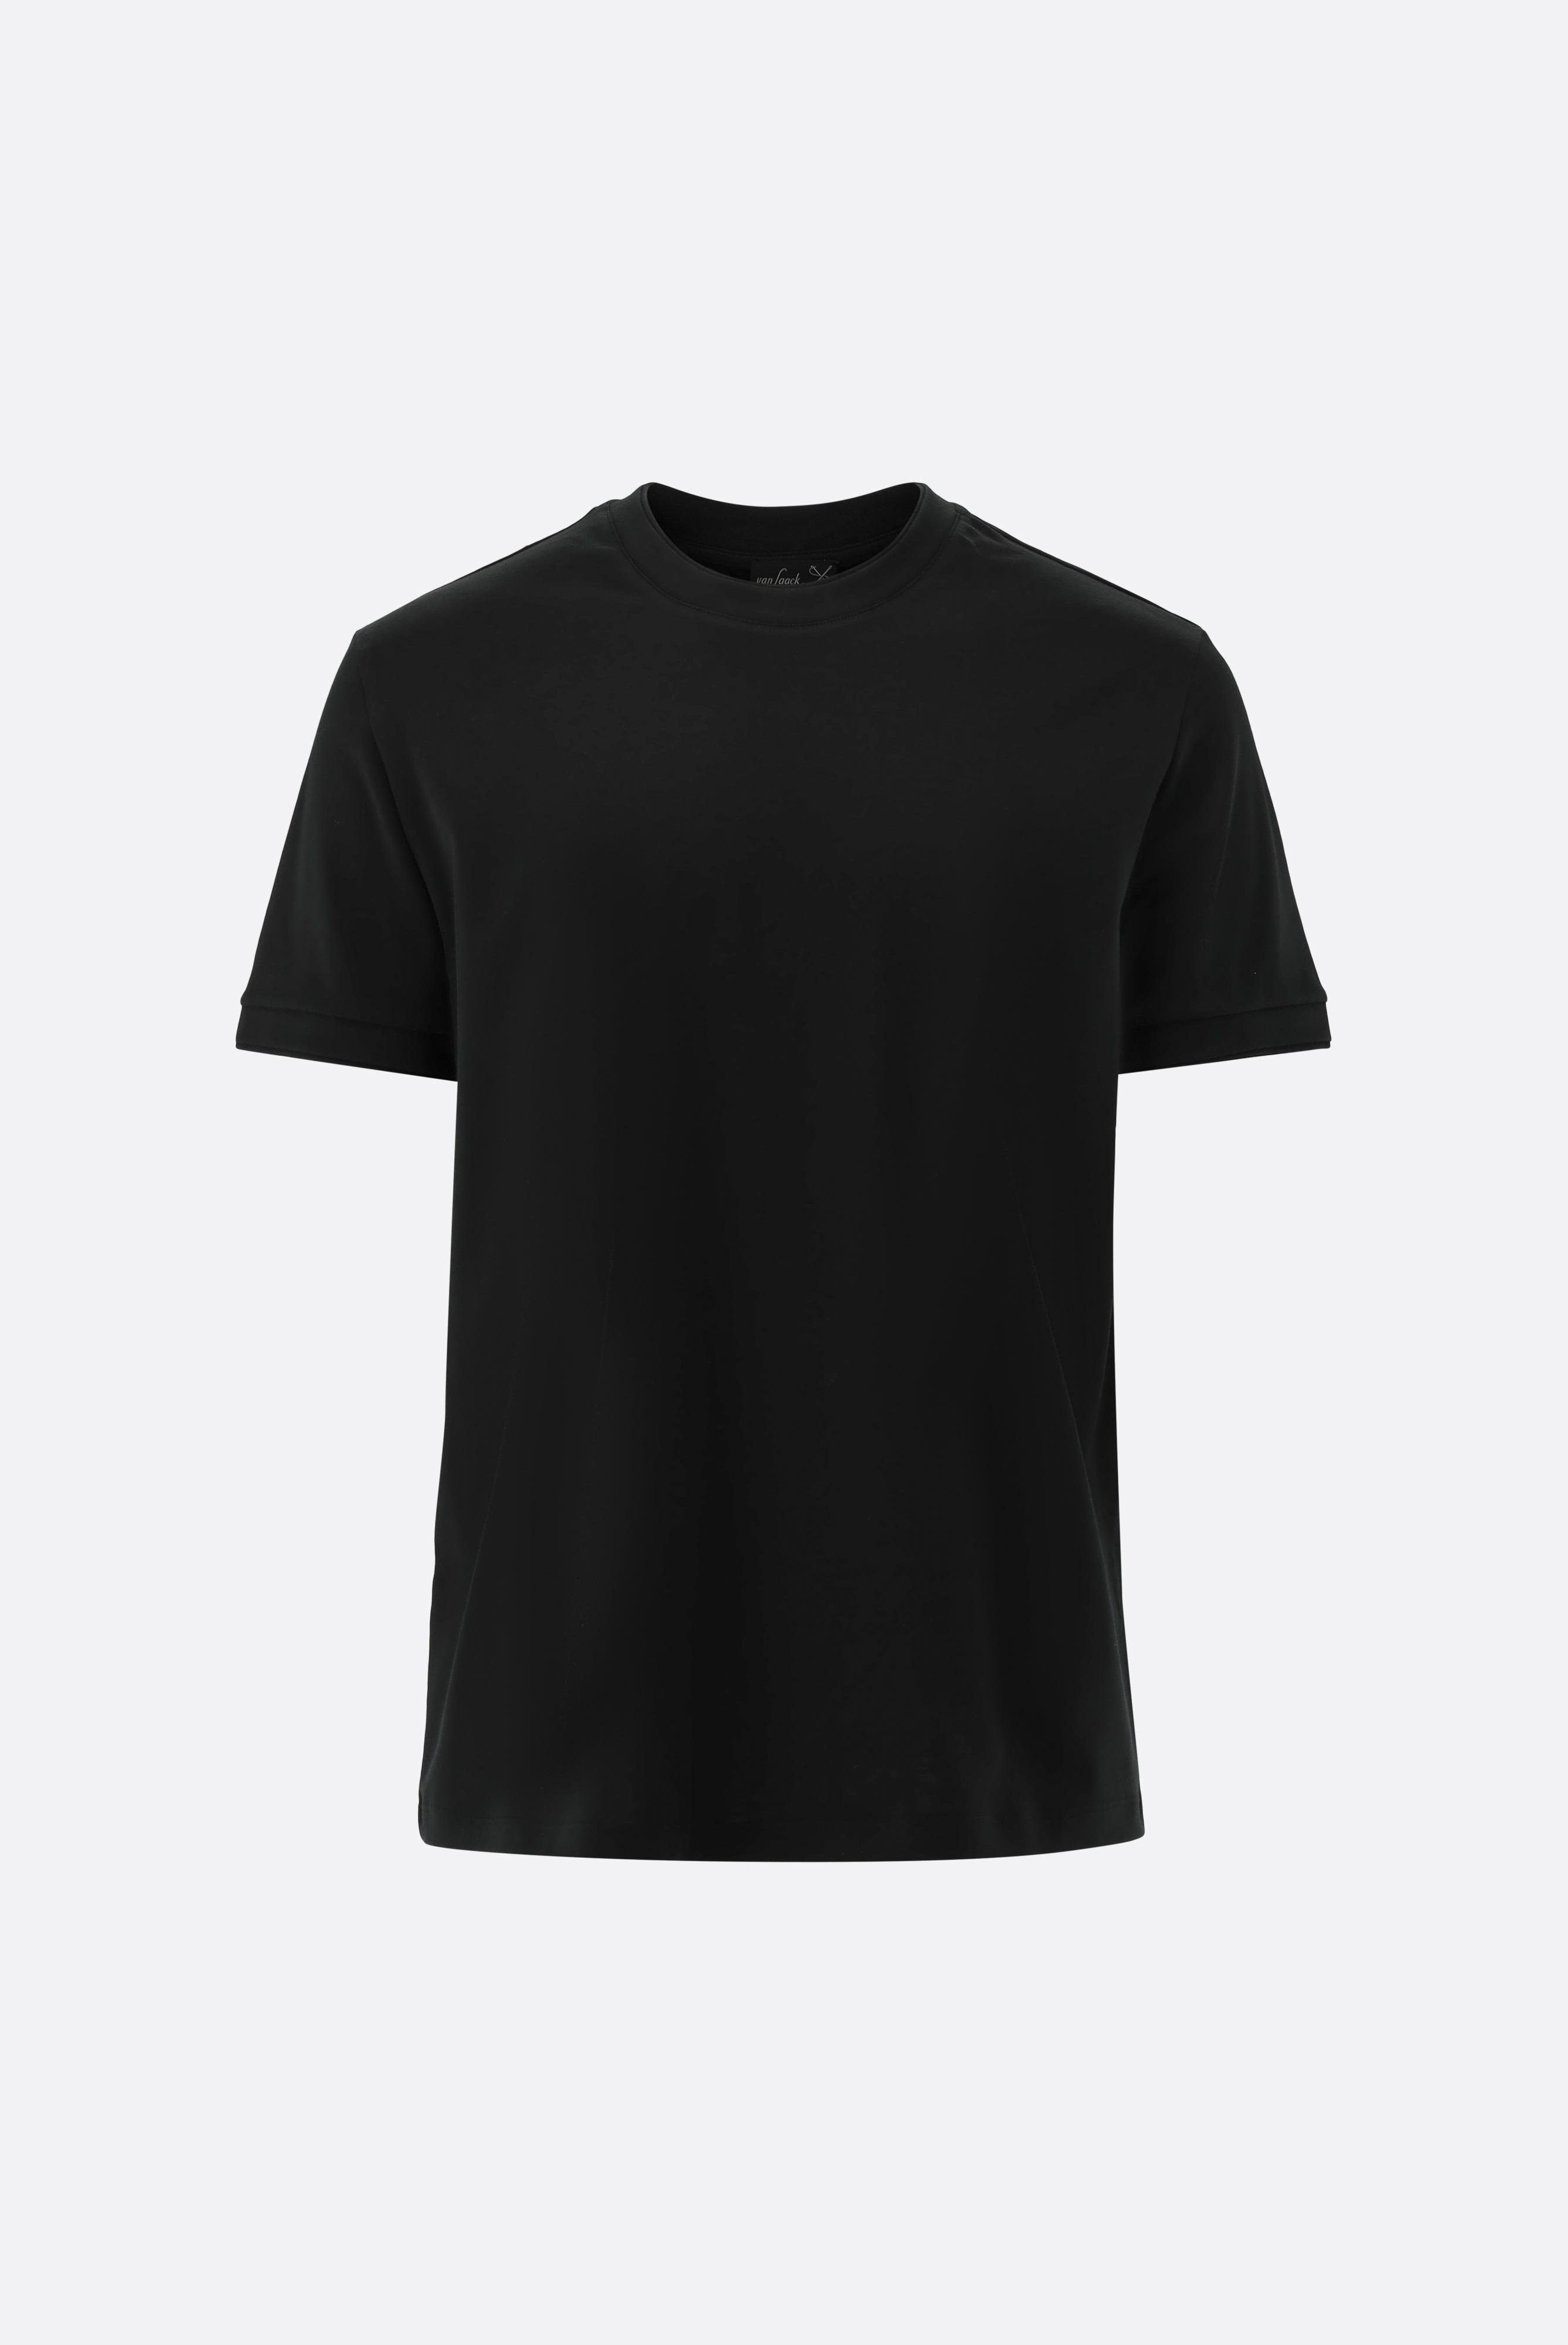 T-Shirts+T-shirt with piping details+20.1673.U2.180053.099.XS